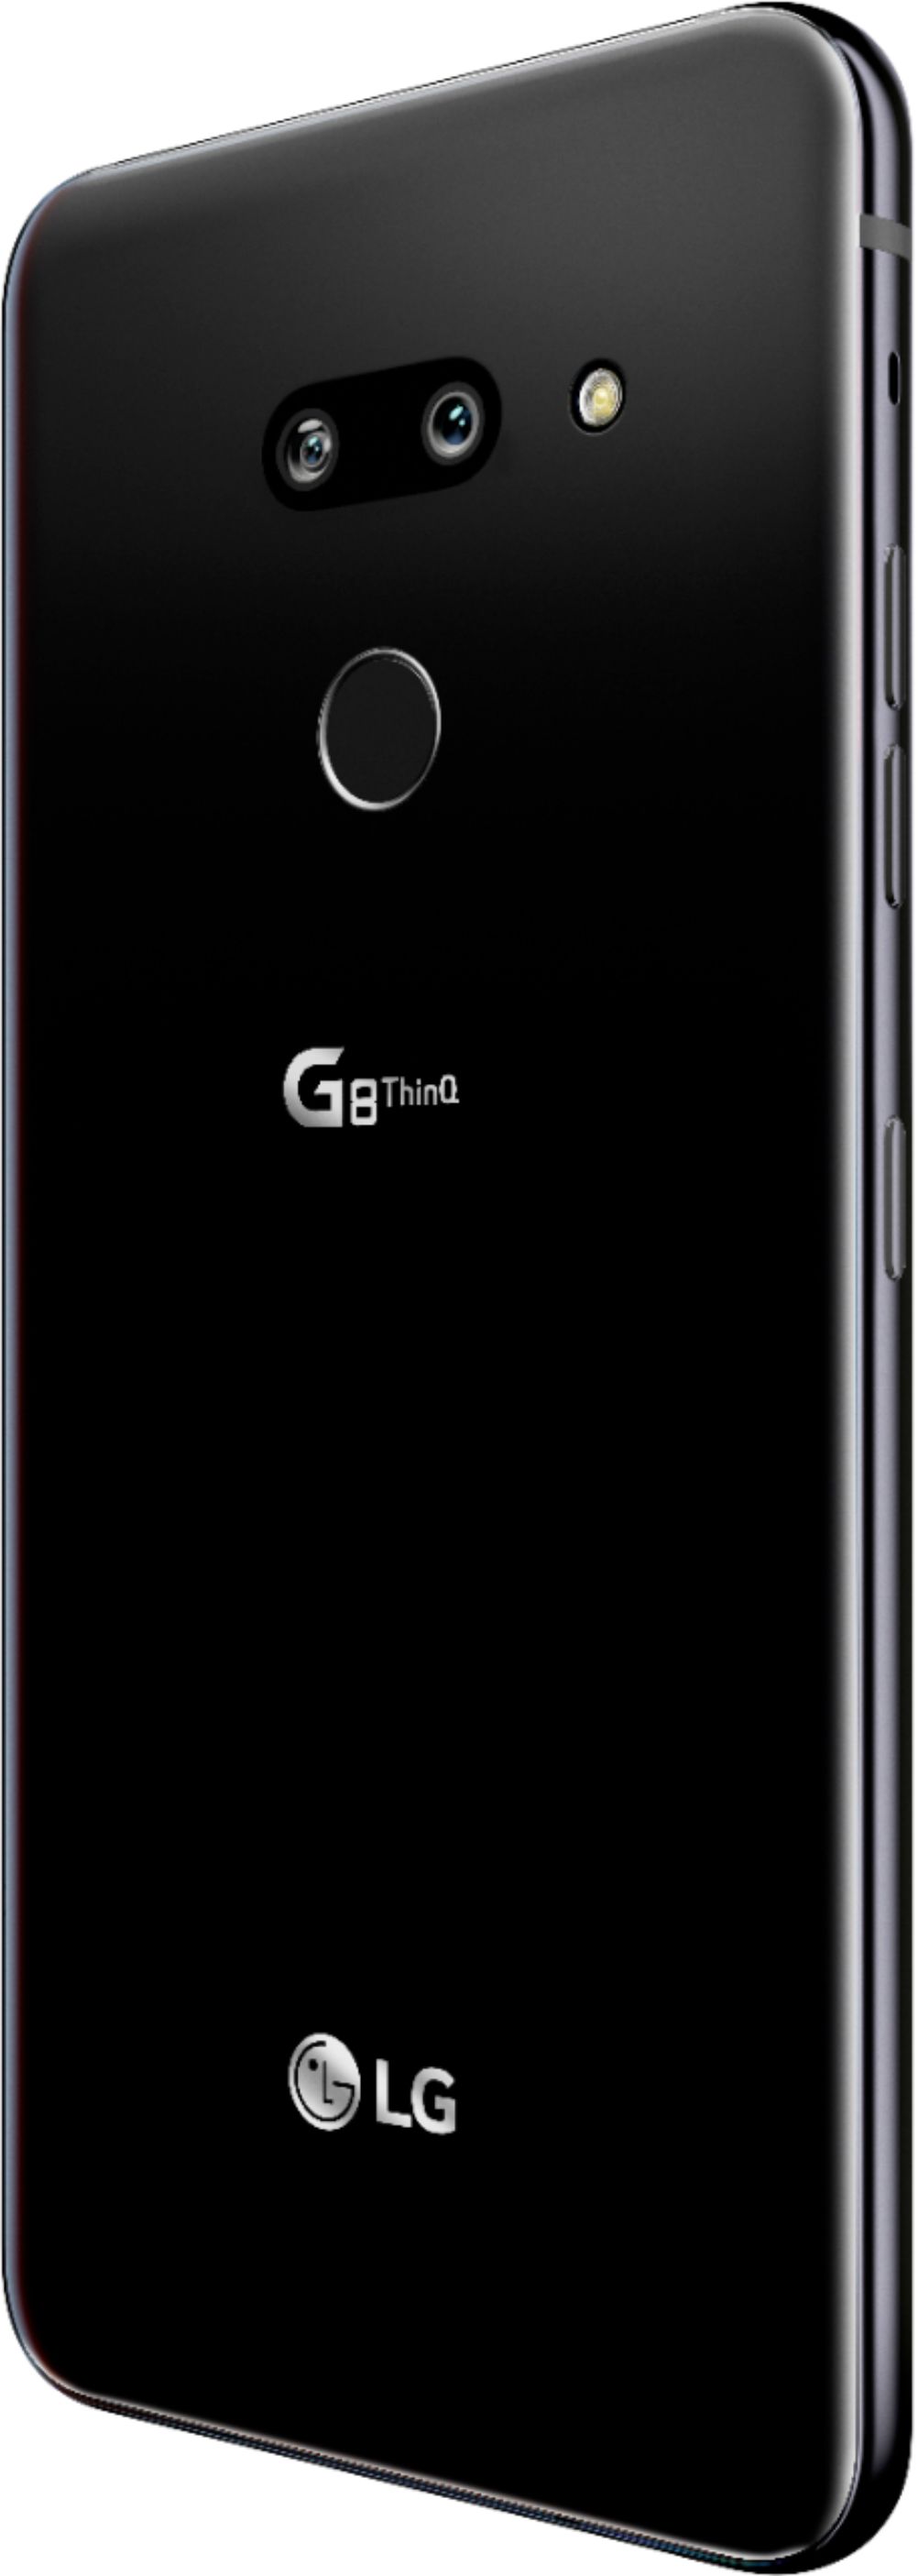 lineal cuatro veces vistazo Best Buy: LG G8 ThinQ with 128GB Memory Cell Phone (Unlocked) Aurora Black  LG G8 THINQ